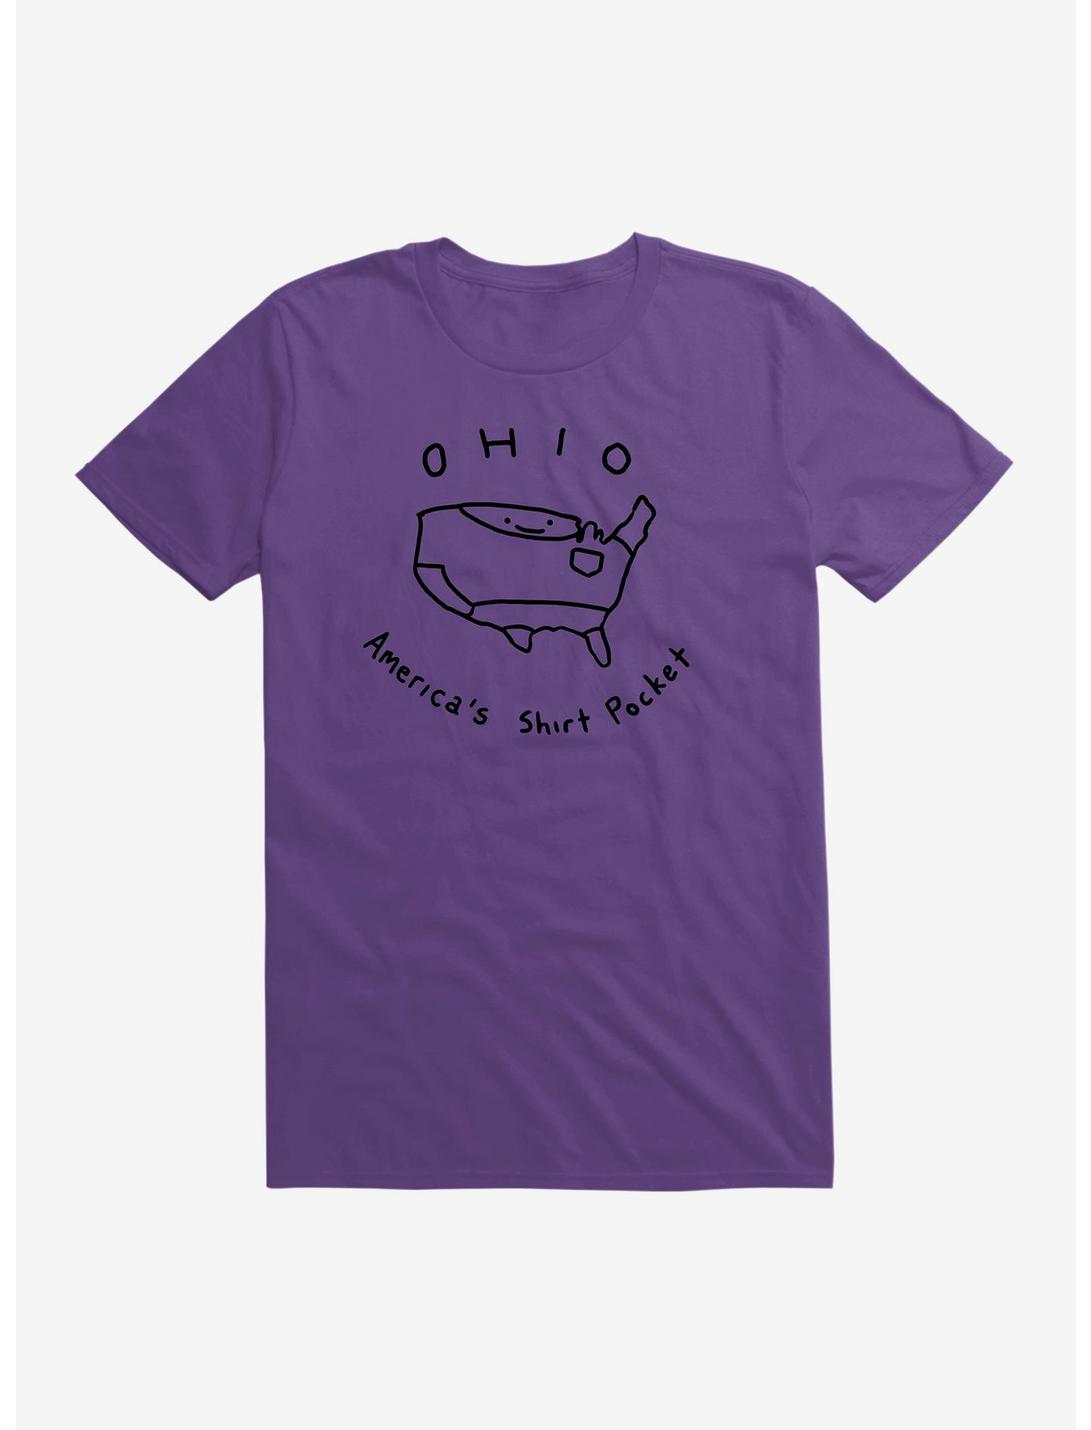 Ohio America's Shirt Pocket T-Shirt, PURPLE, hi-res